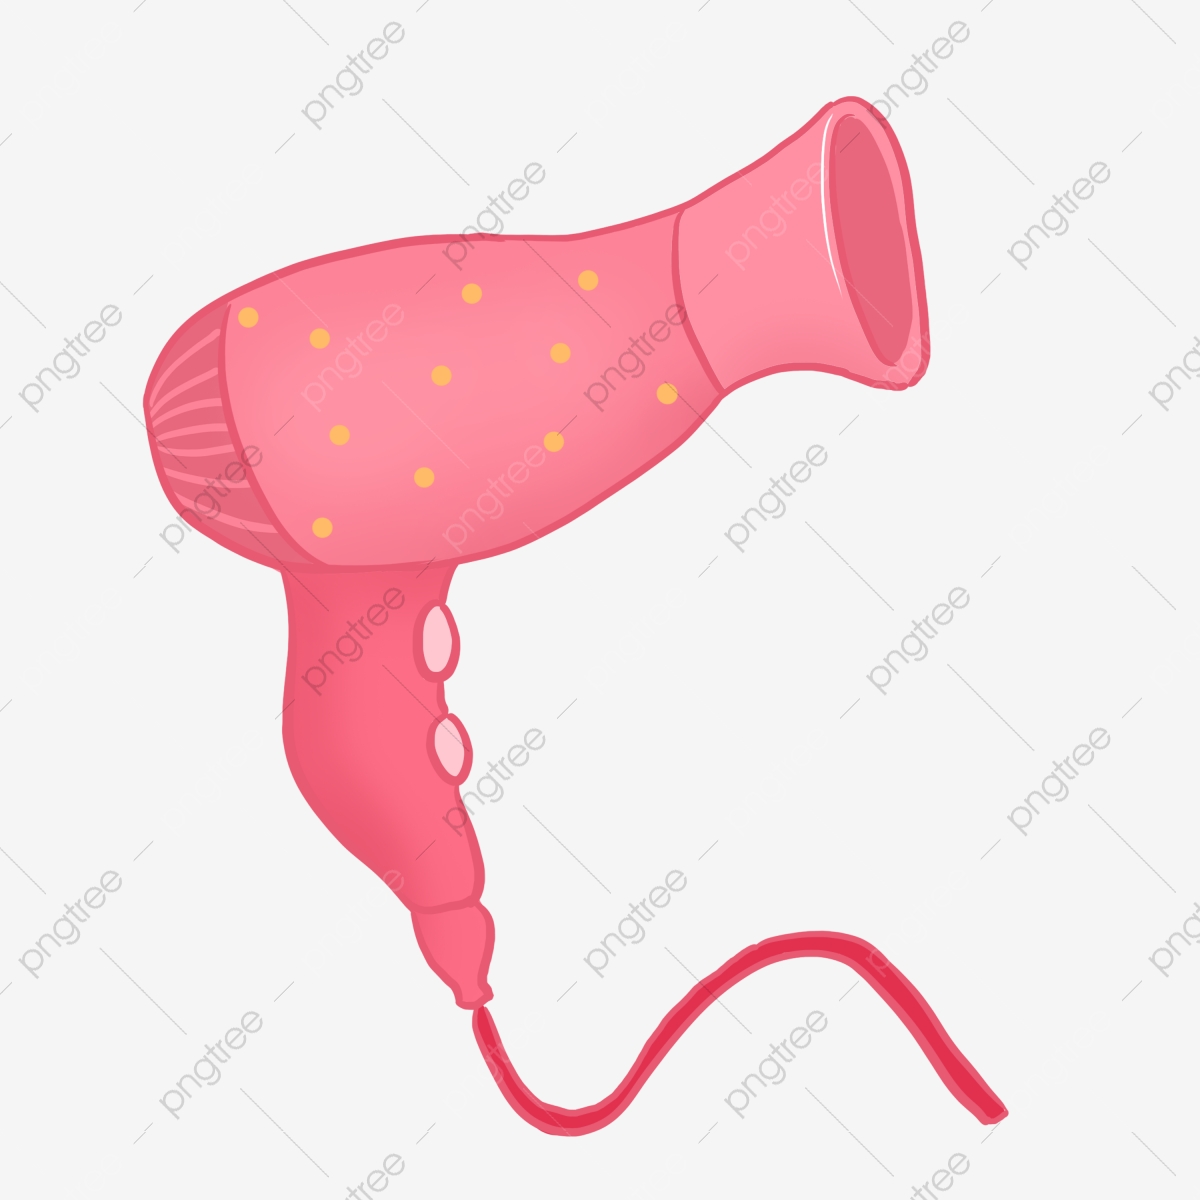 plug clipart pink